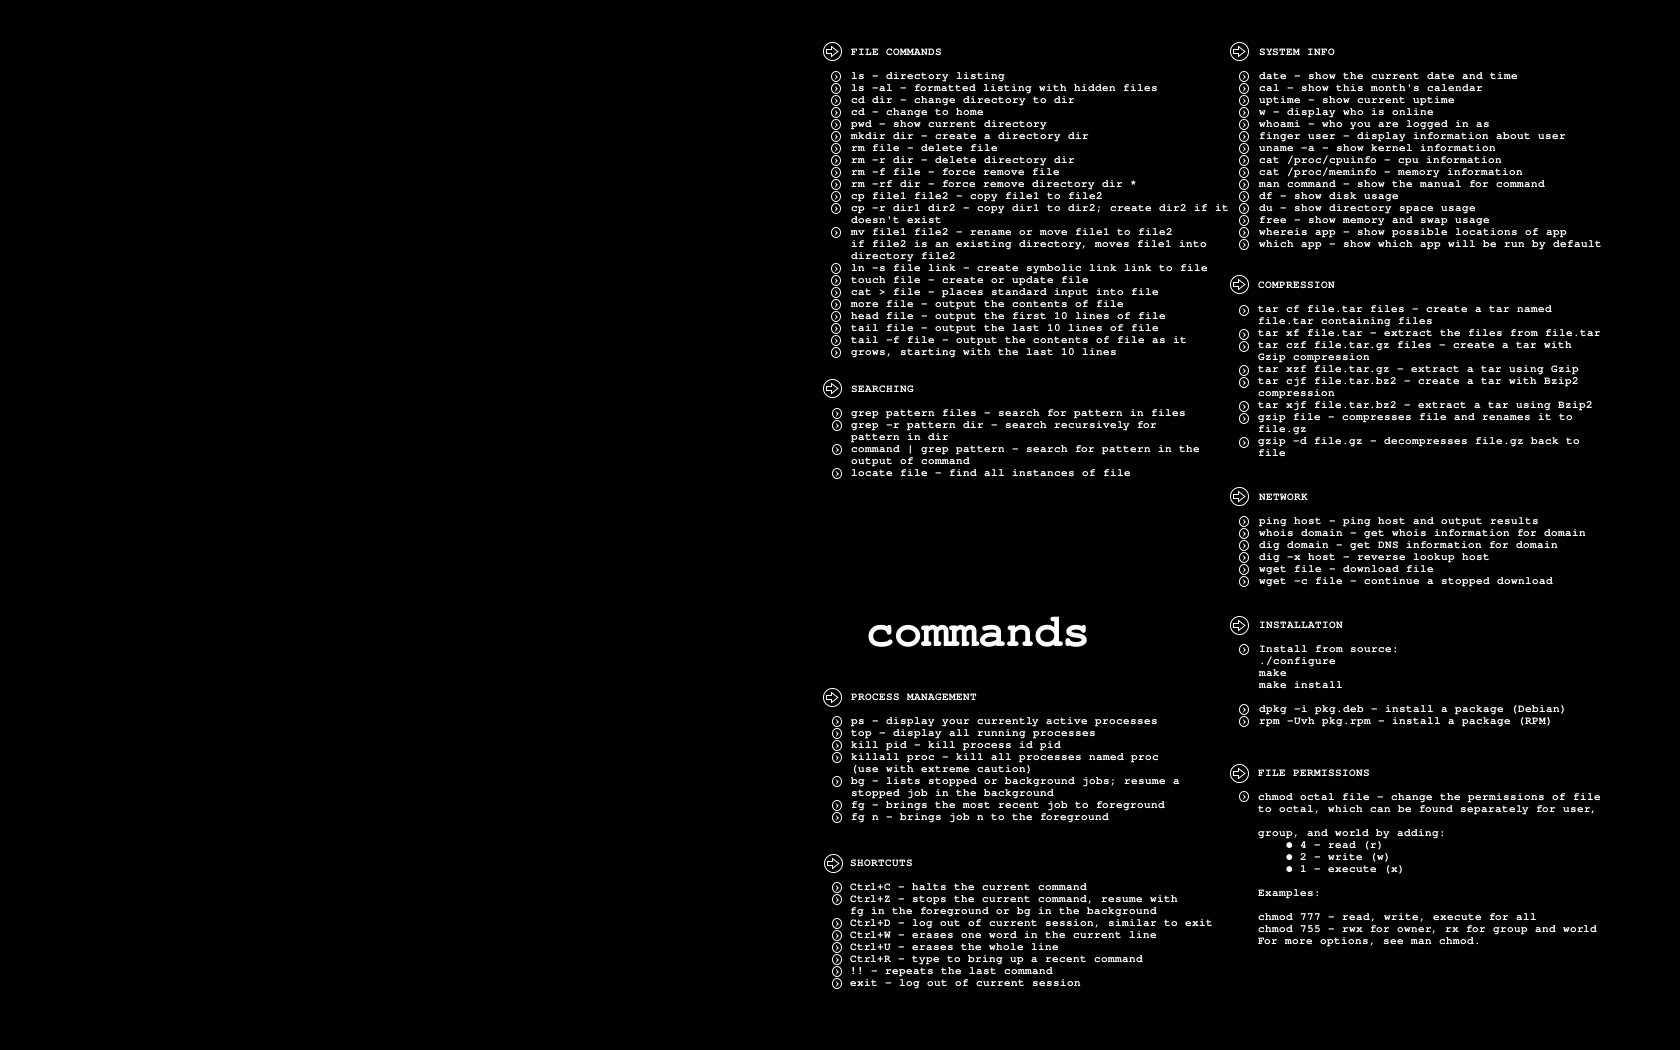 Host lookup. Шпаргалка Linux. Командная строка линукс. Linux Commands Wallpaper. Linux Cheat Sheet Wallpaper.